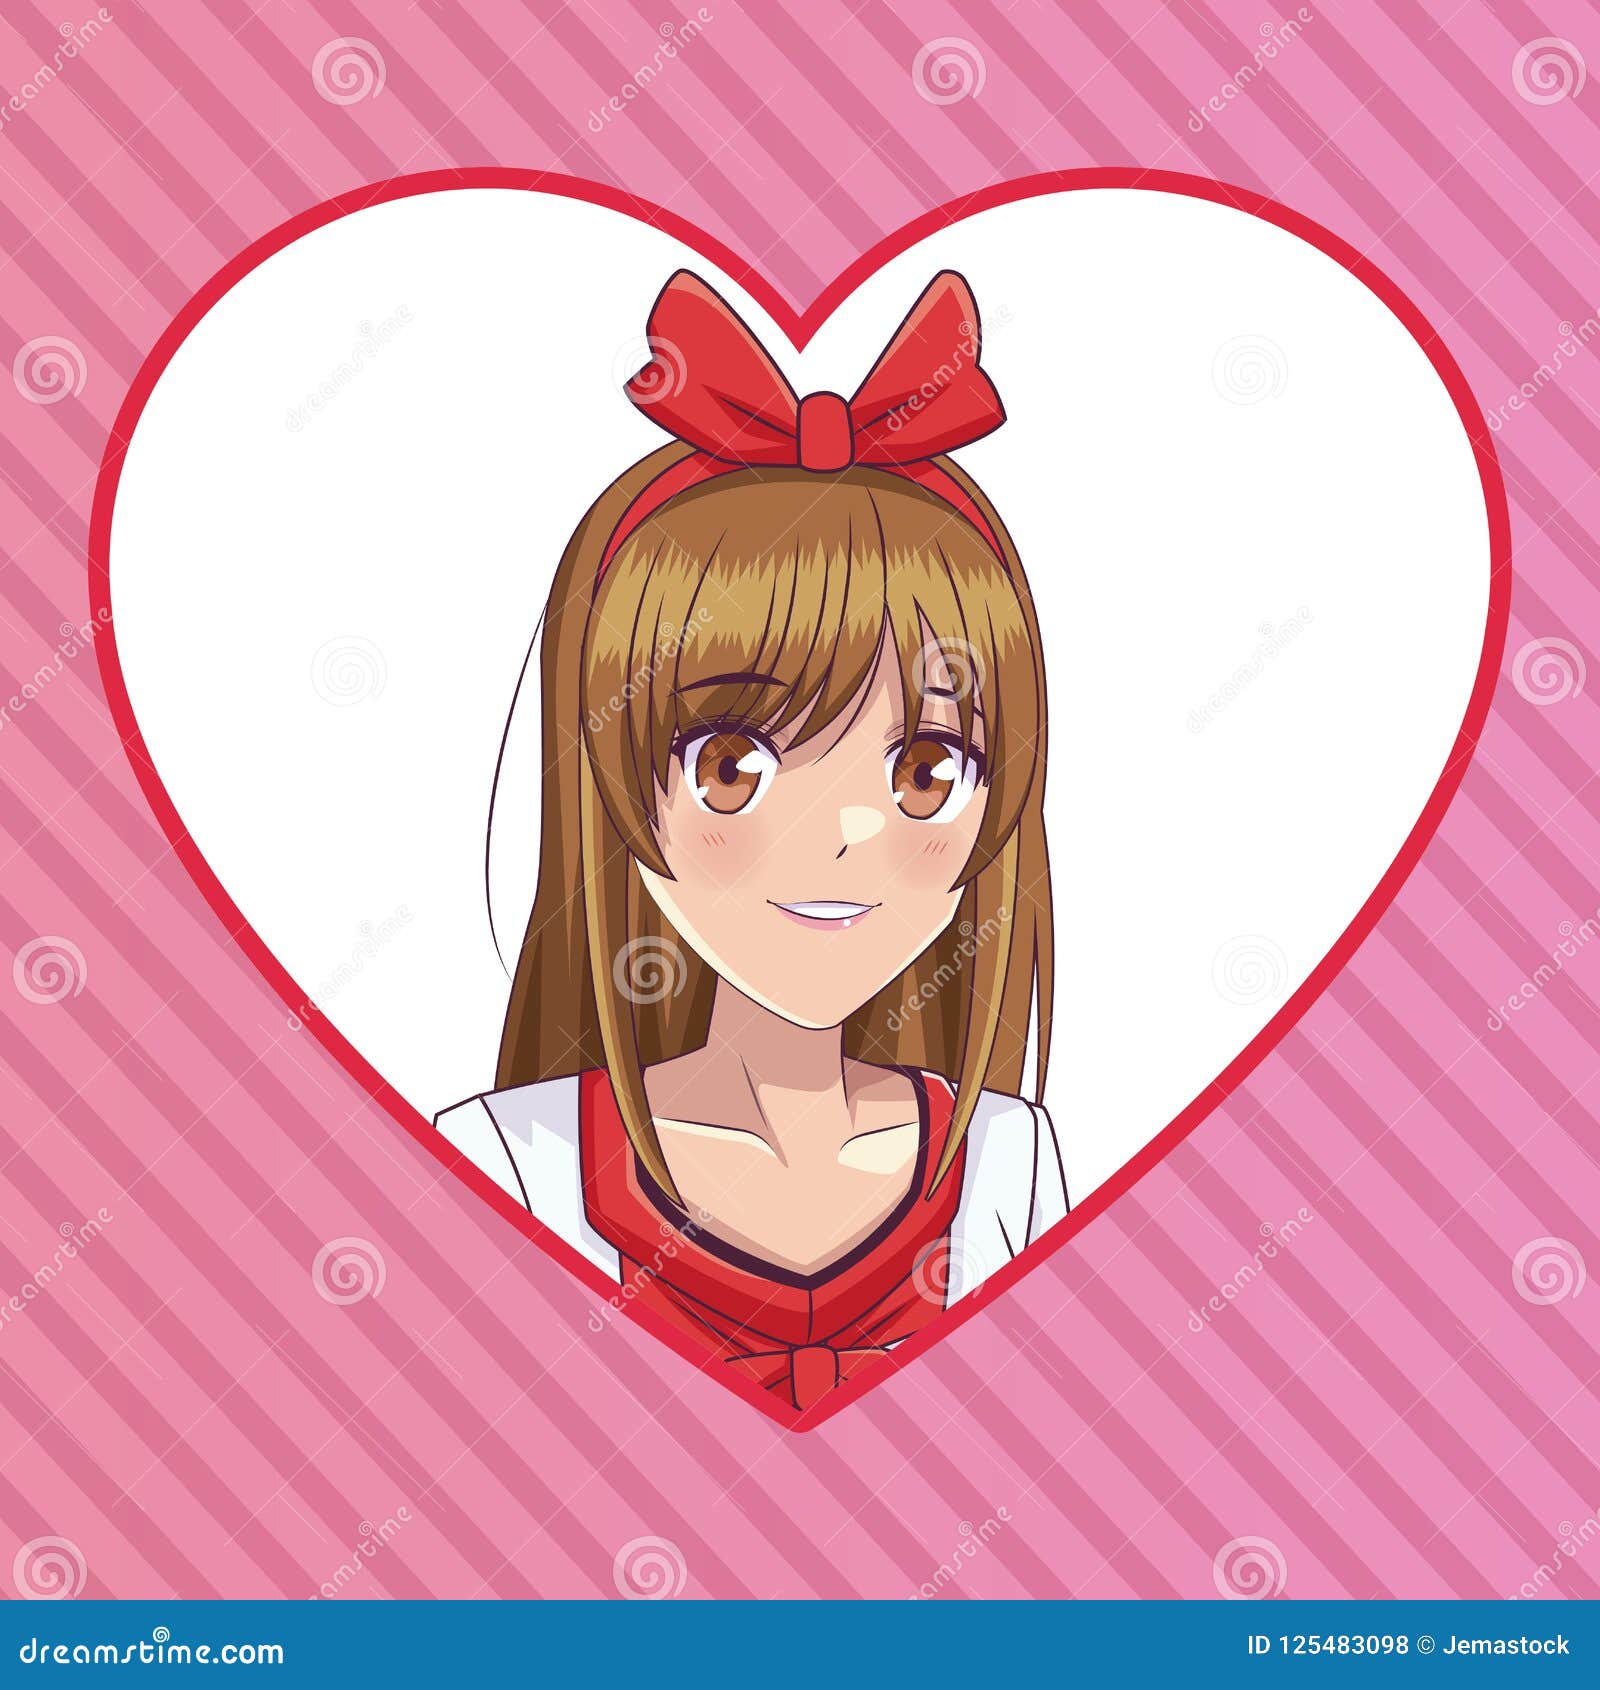 Beautiful woman anime face stock vector. Illustration of comic - 125483098